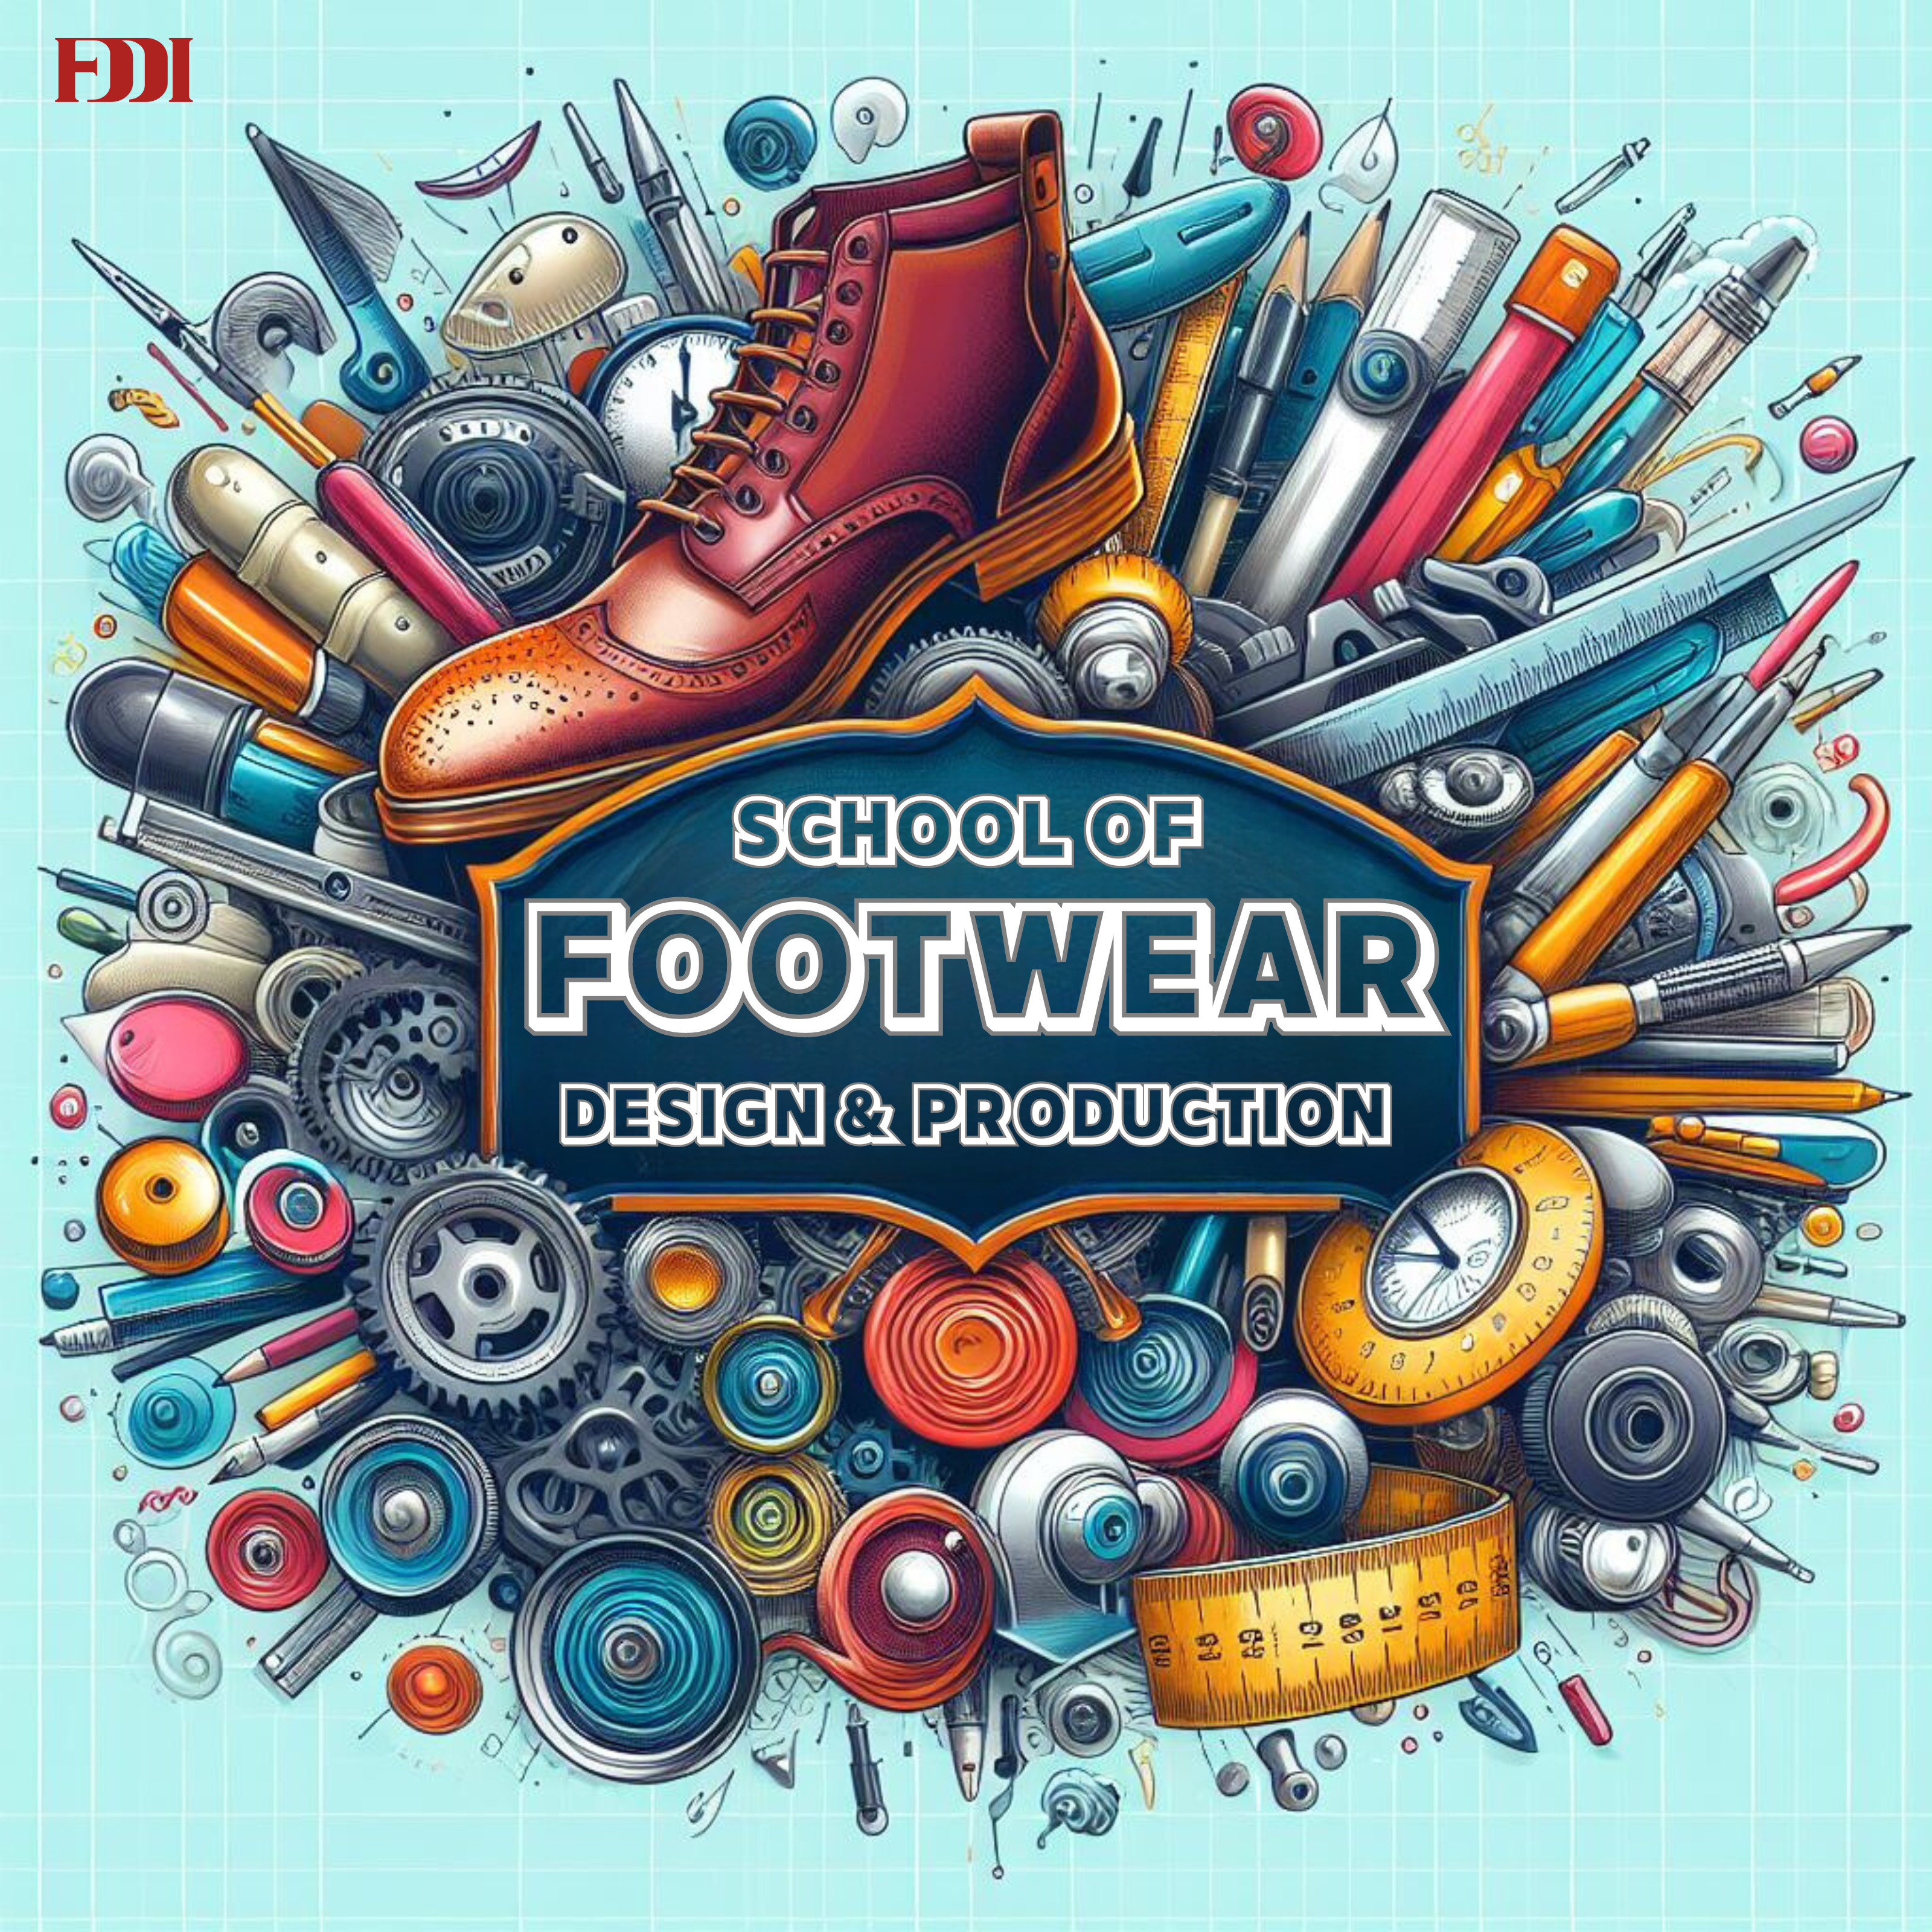 FDDI School of Footwear Design & Production: Shape the Future of Footwear